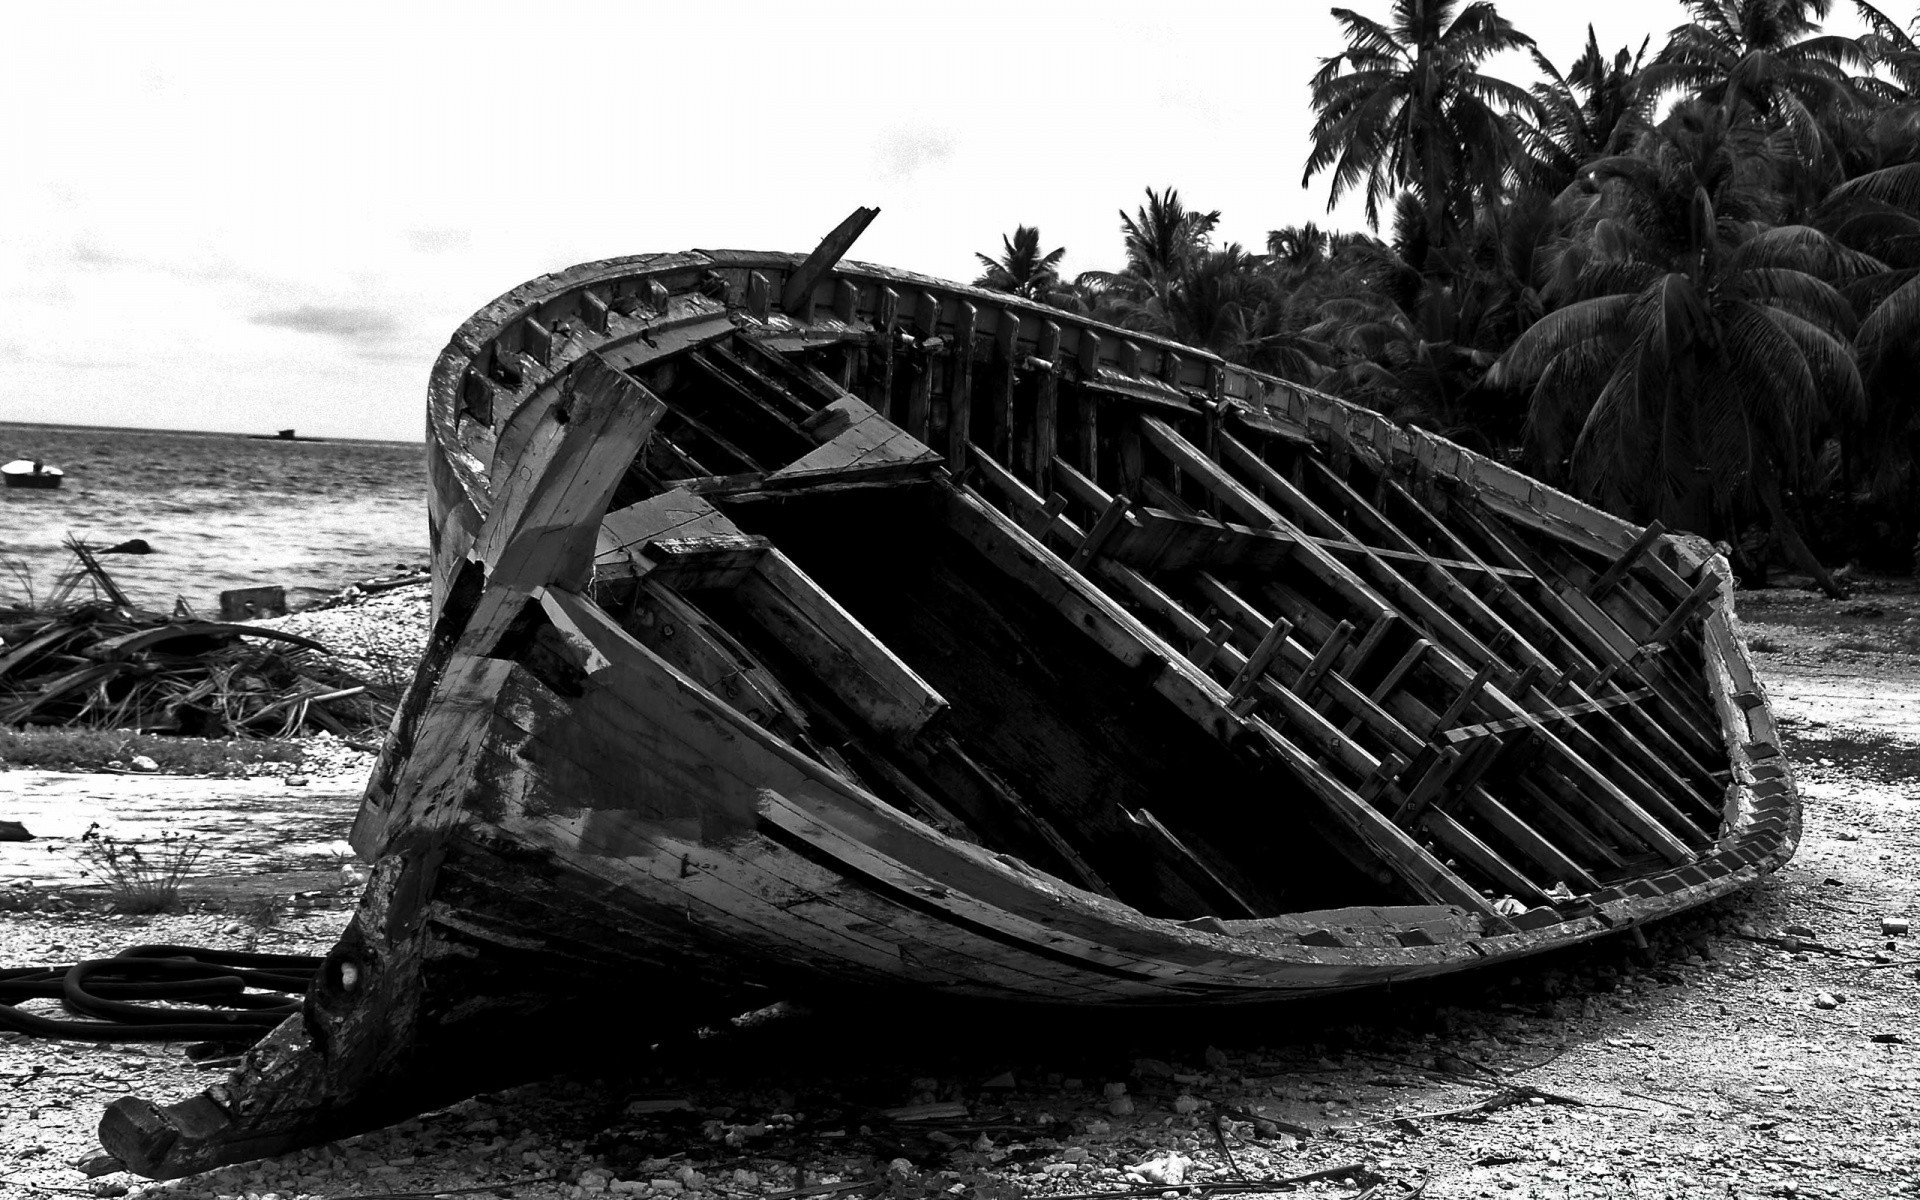 black vehicle transportation system watercraft boat shipwreck sea beach water seashore wreckage ship ocean abandoned